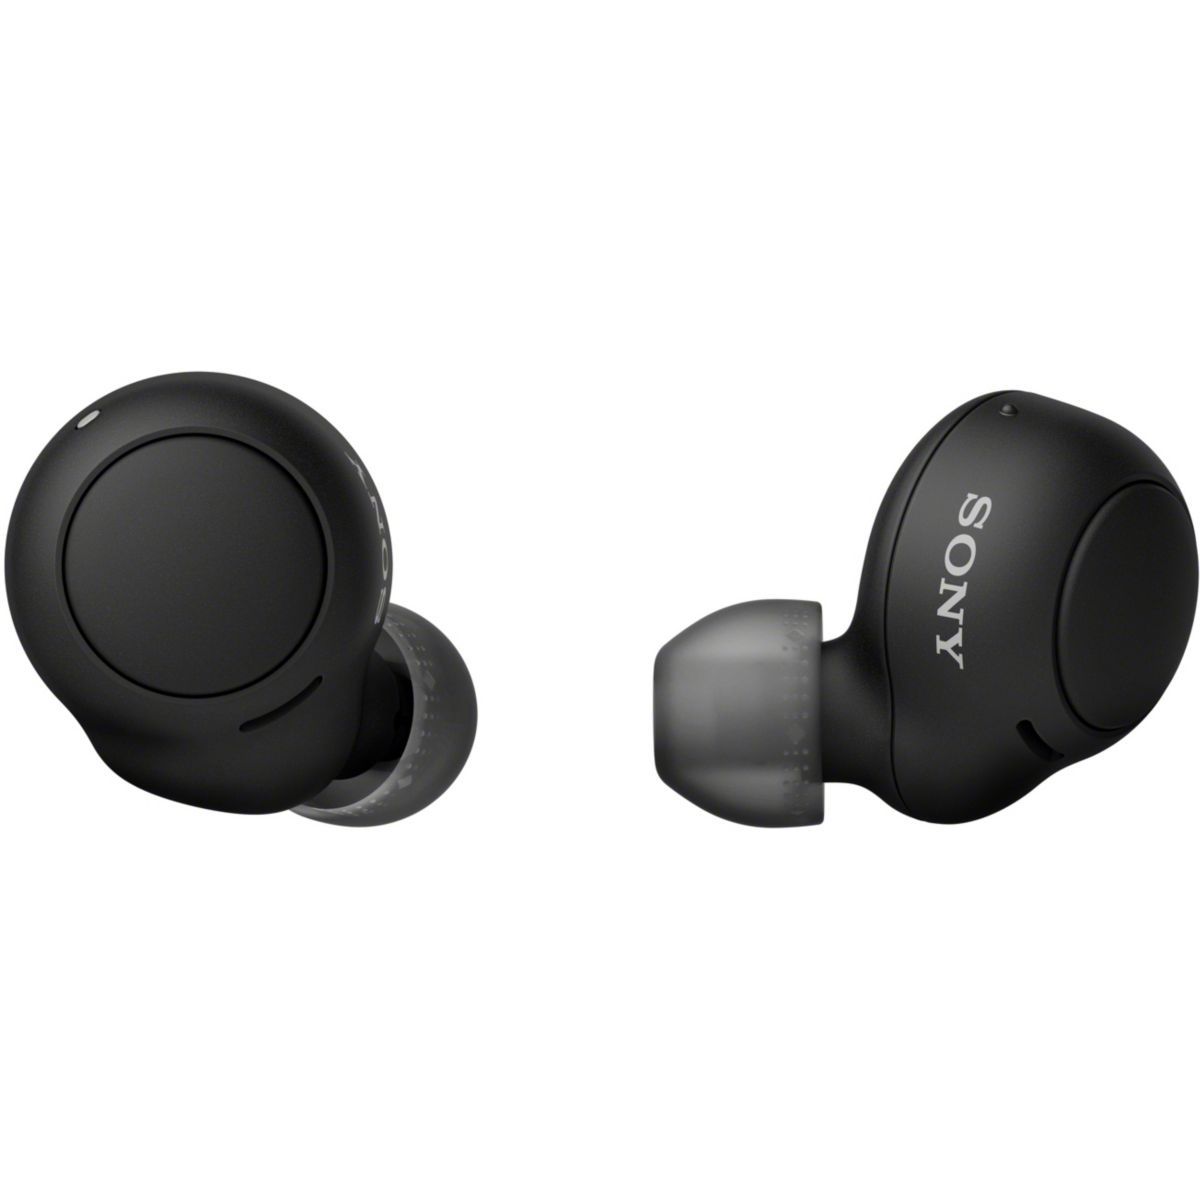 Ecouteurs intra-auriculaires avec micro Samsung Tuned by AKG USB Type-C  (Blanc) à prix bas